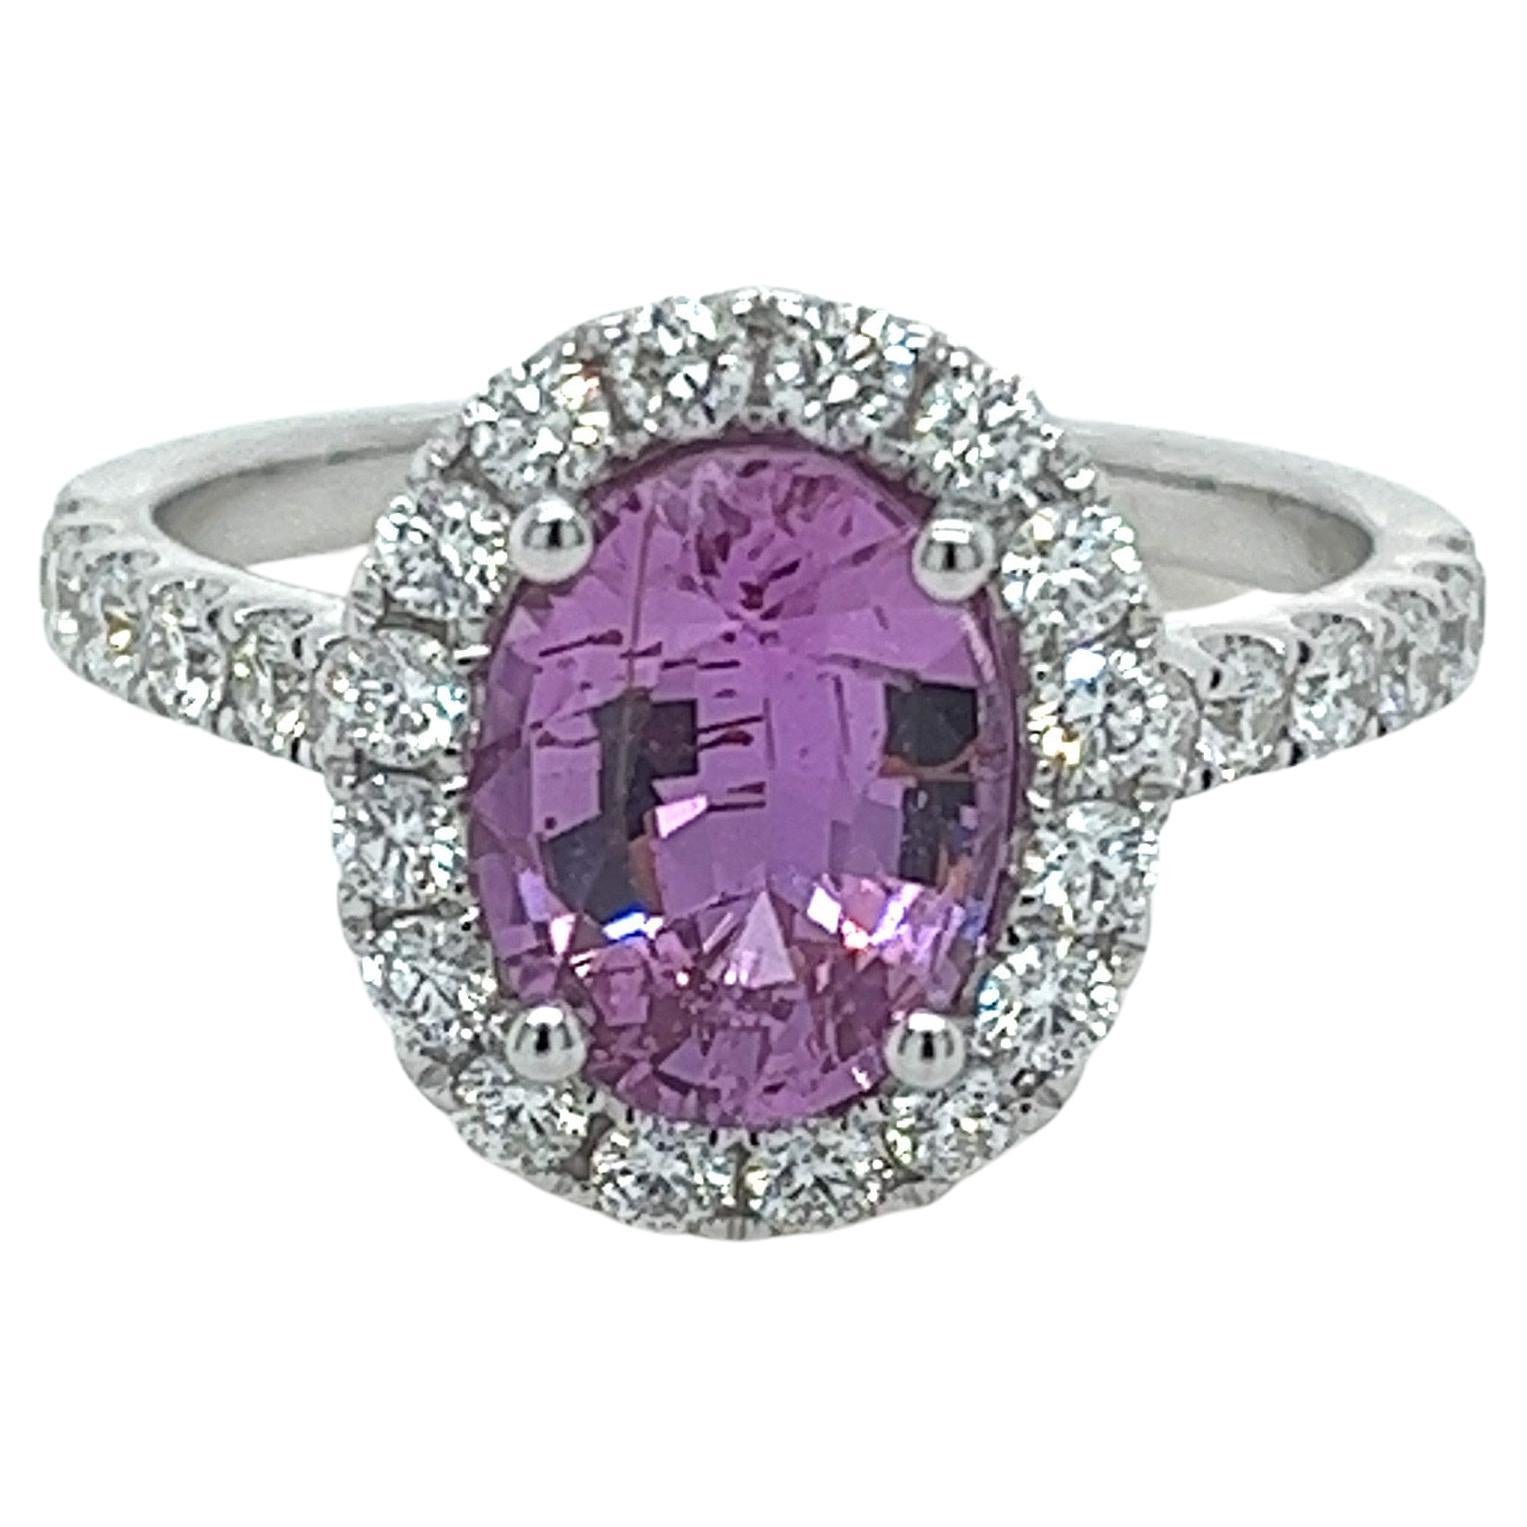 No Heat 2.27 Carat Pink Sapphire & Diamond Ring in 18 Karat White Gold For Sale